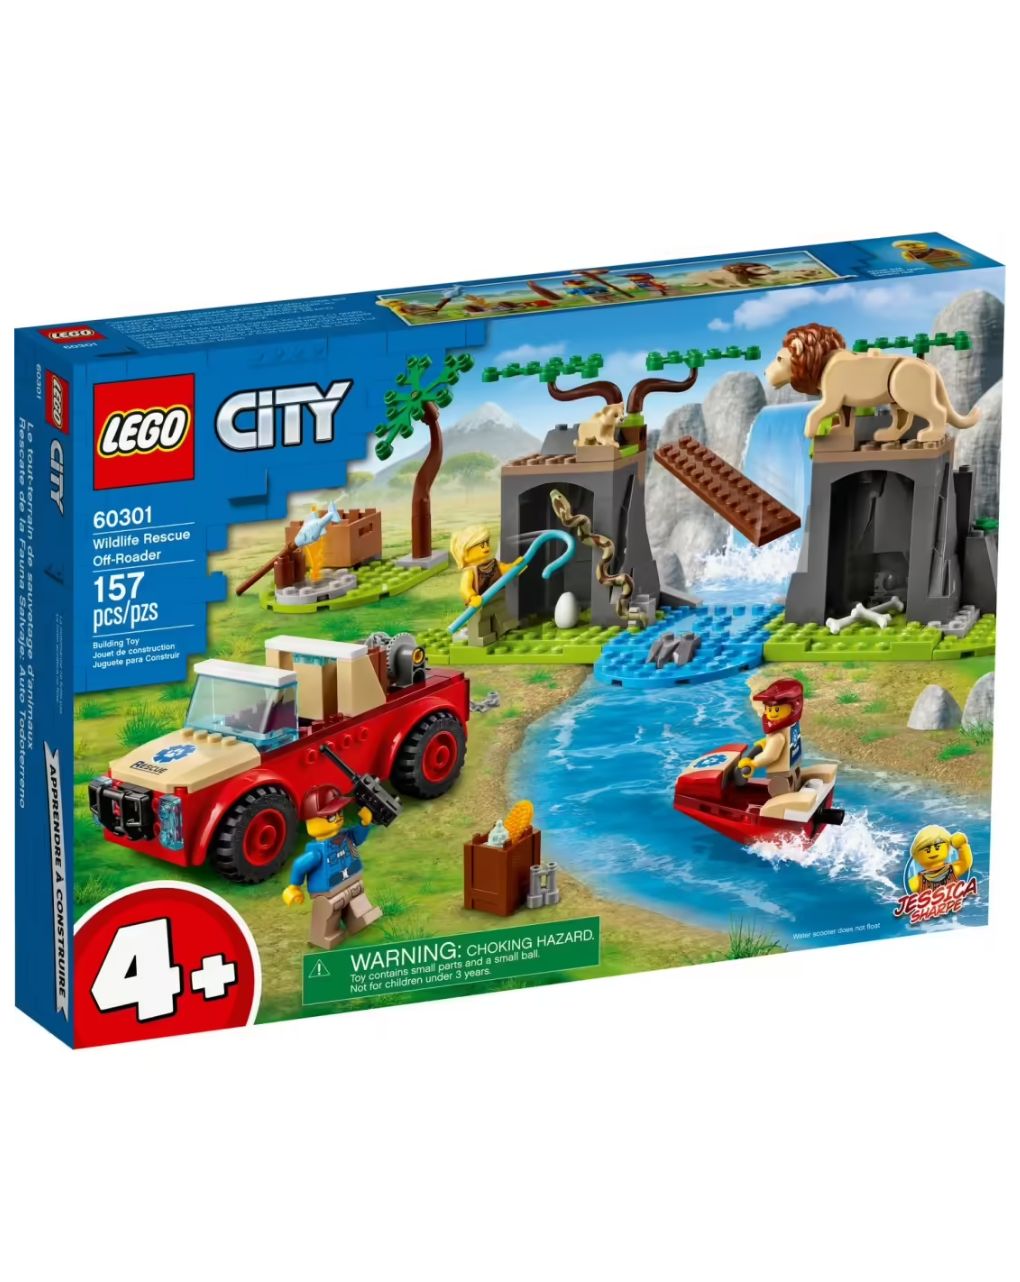 Lego city wildlife εκτός δρόμου όχημα διάσωσης άγριων ζώων  60301 - Lego, Lego City